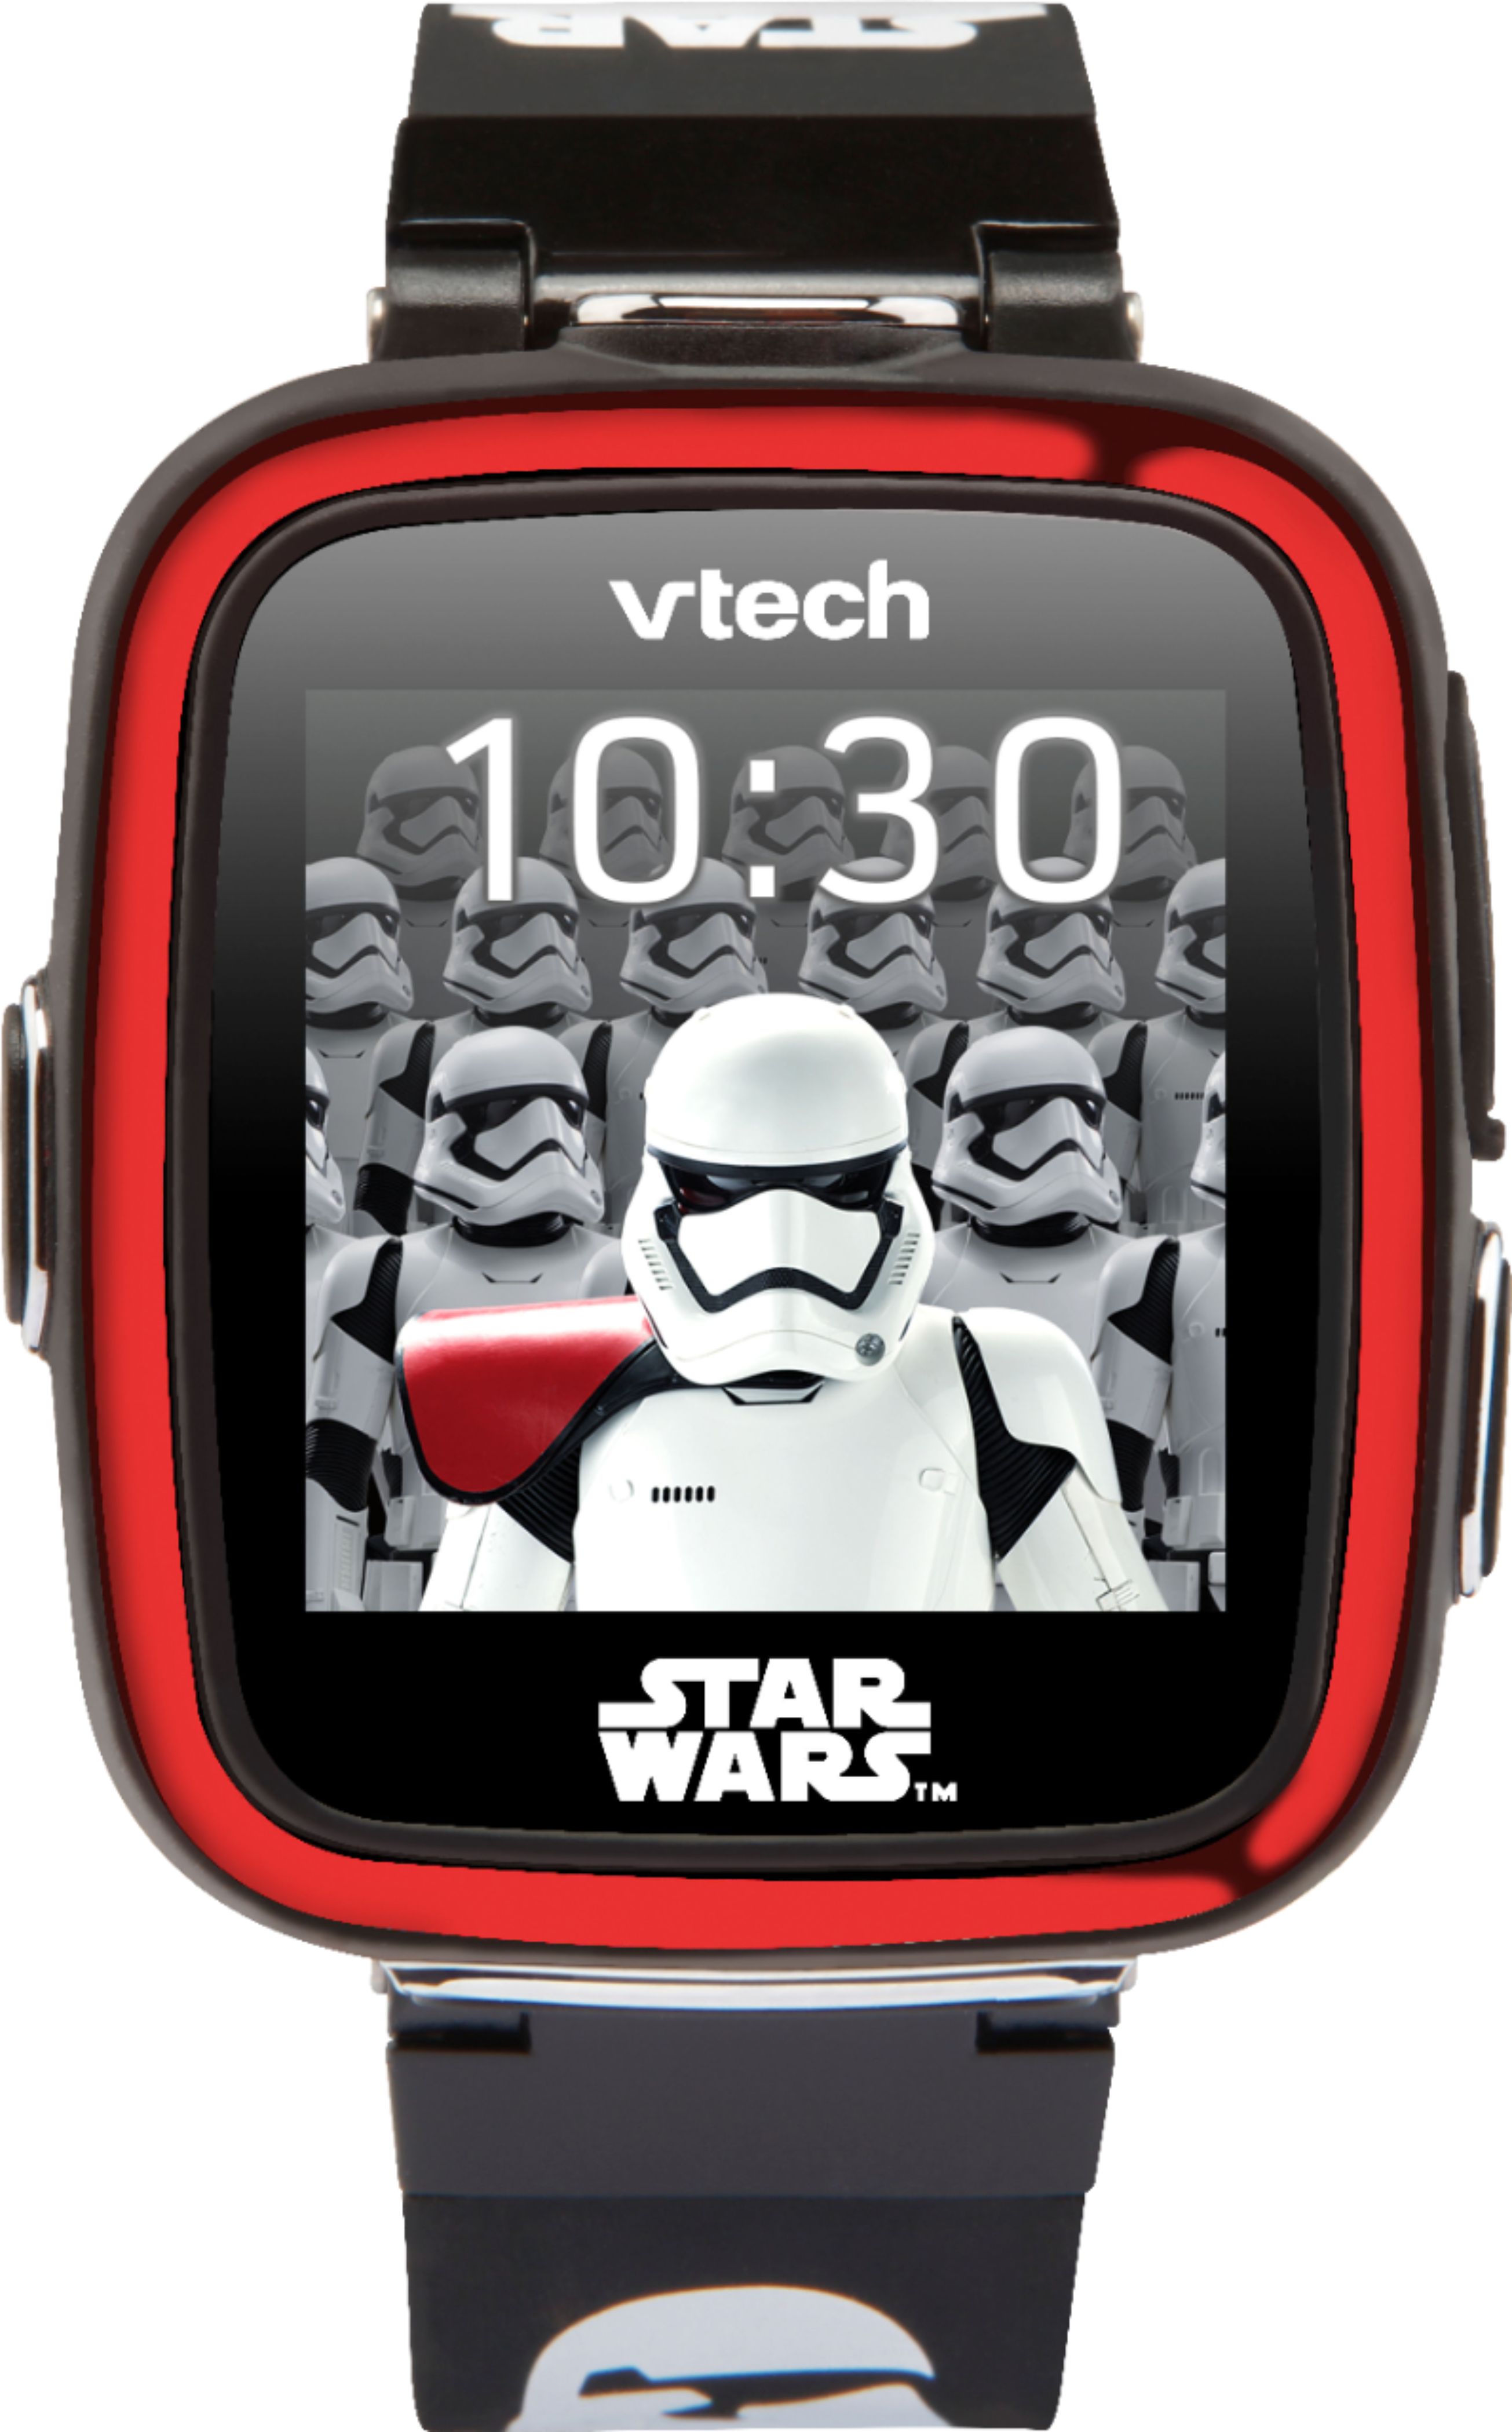 vtech kidizoom smartwatch best buy